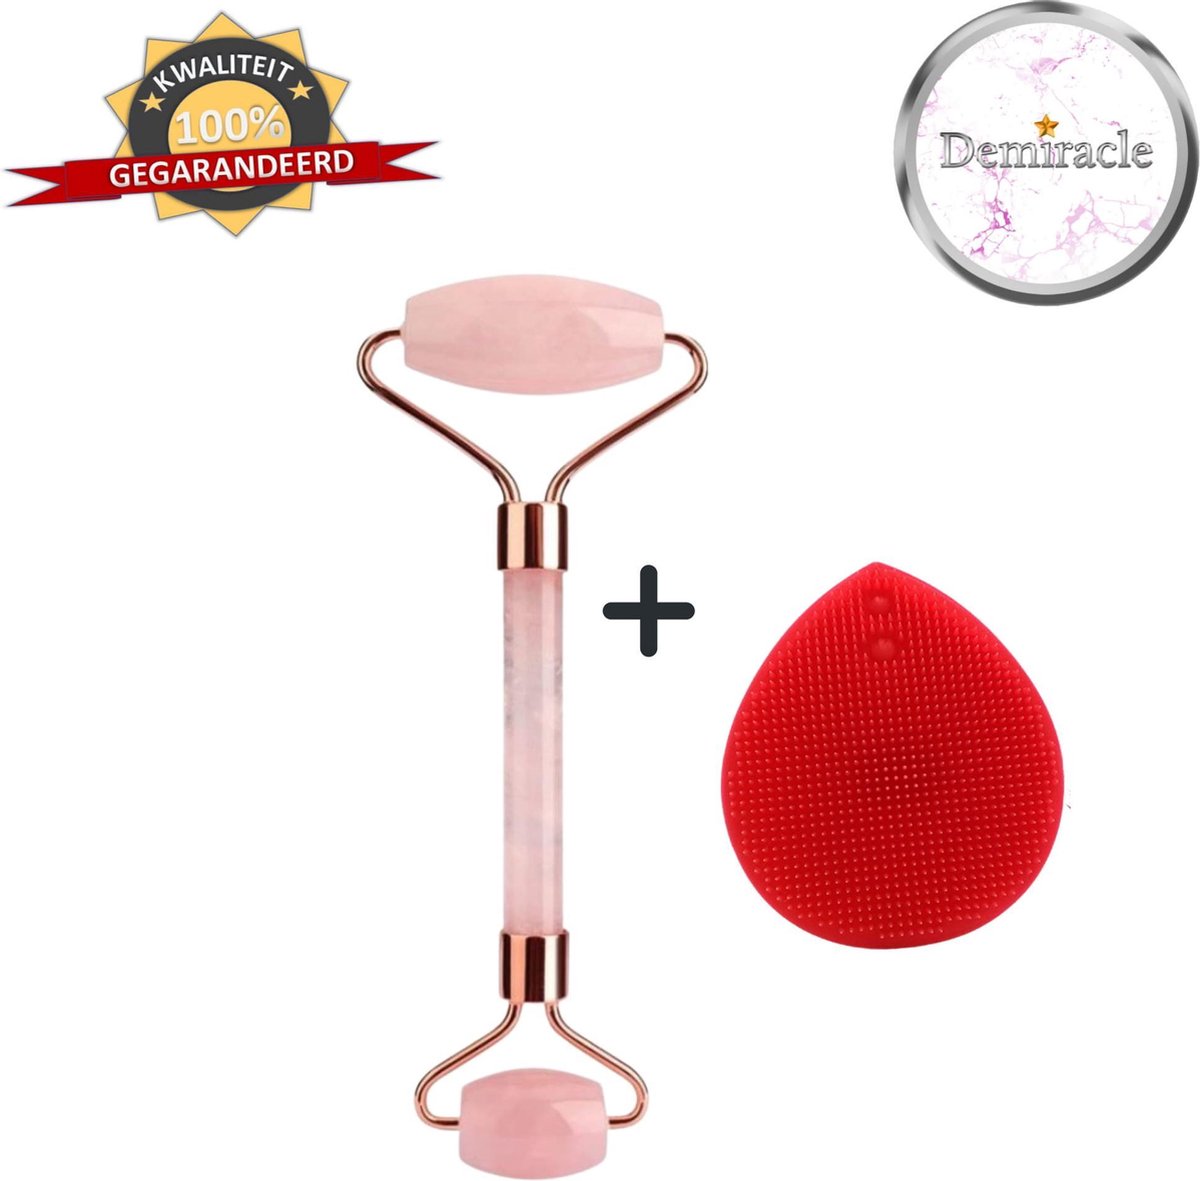 Demiracle Rose Quartz Face Roller met Rode Siliconen Gezichtsborstel - Valentijnsdag - Cadeau - Gezichtsroller - Massage Roller - Jade Roller - Rimpelverwijdering - Ontspanning - Kwaliteit